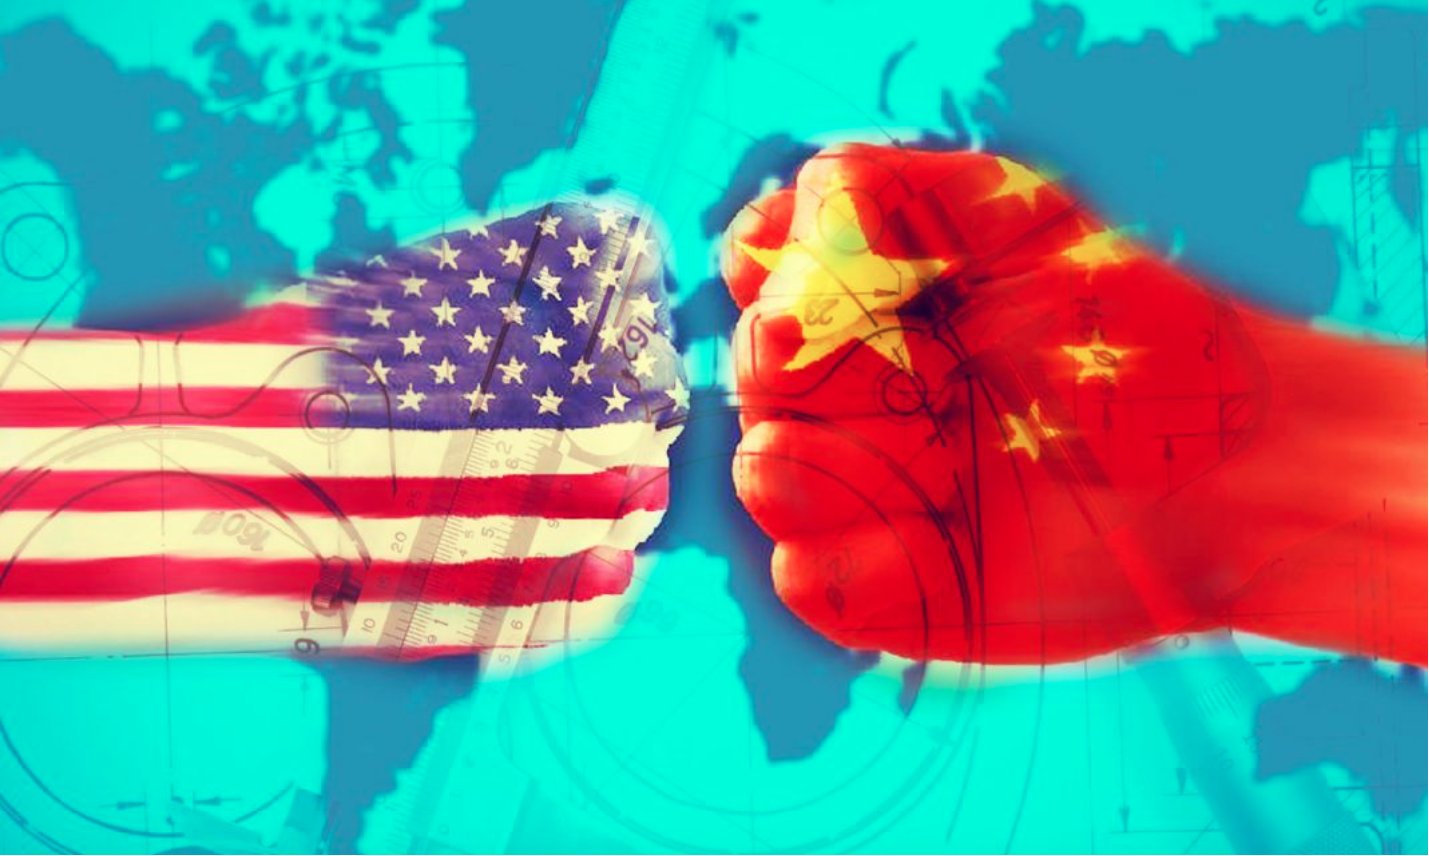 Image of US fist versus China fist